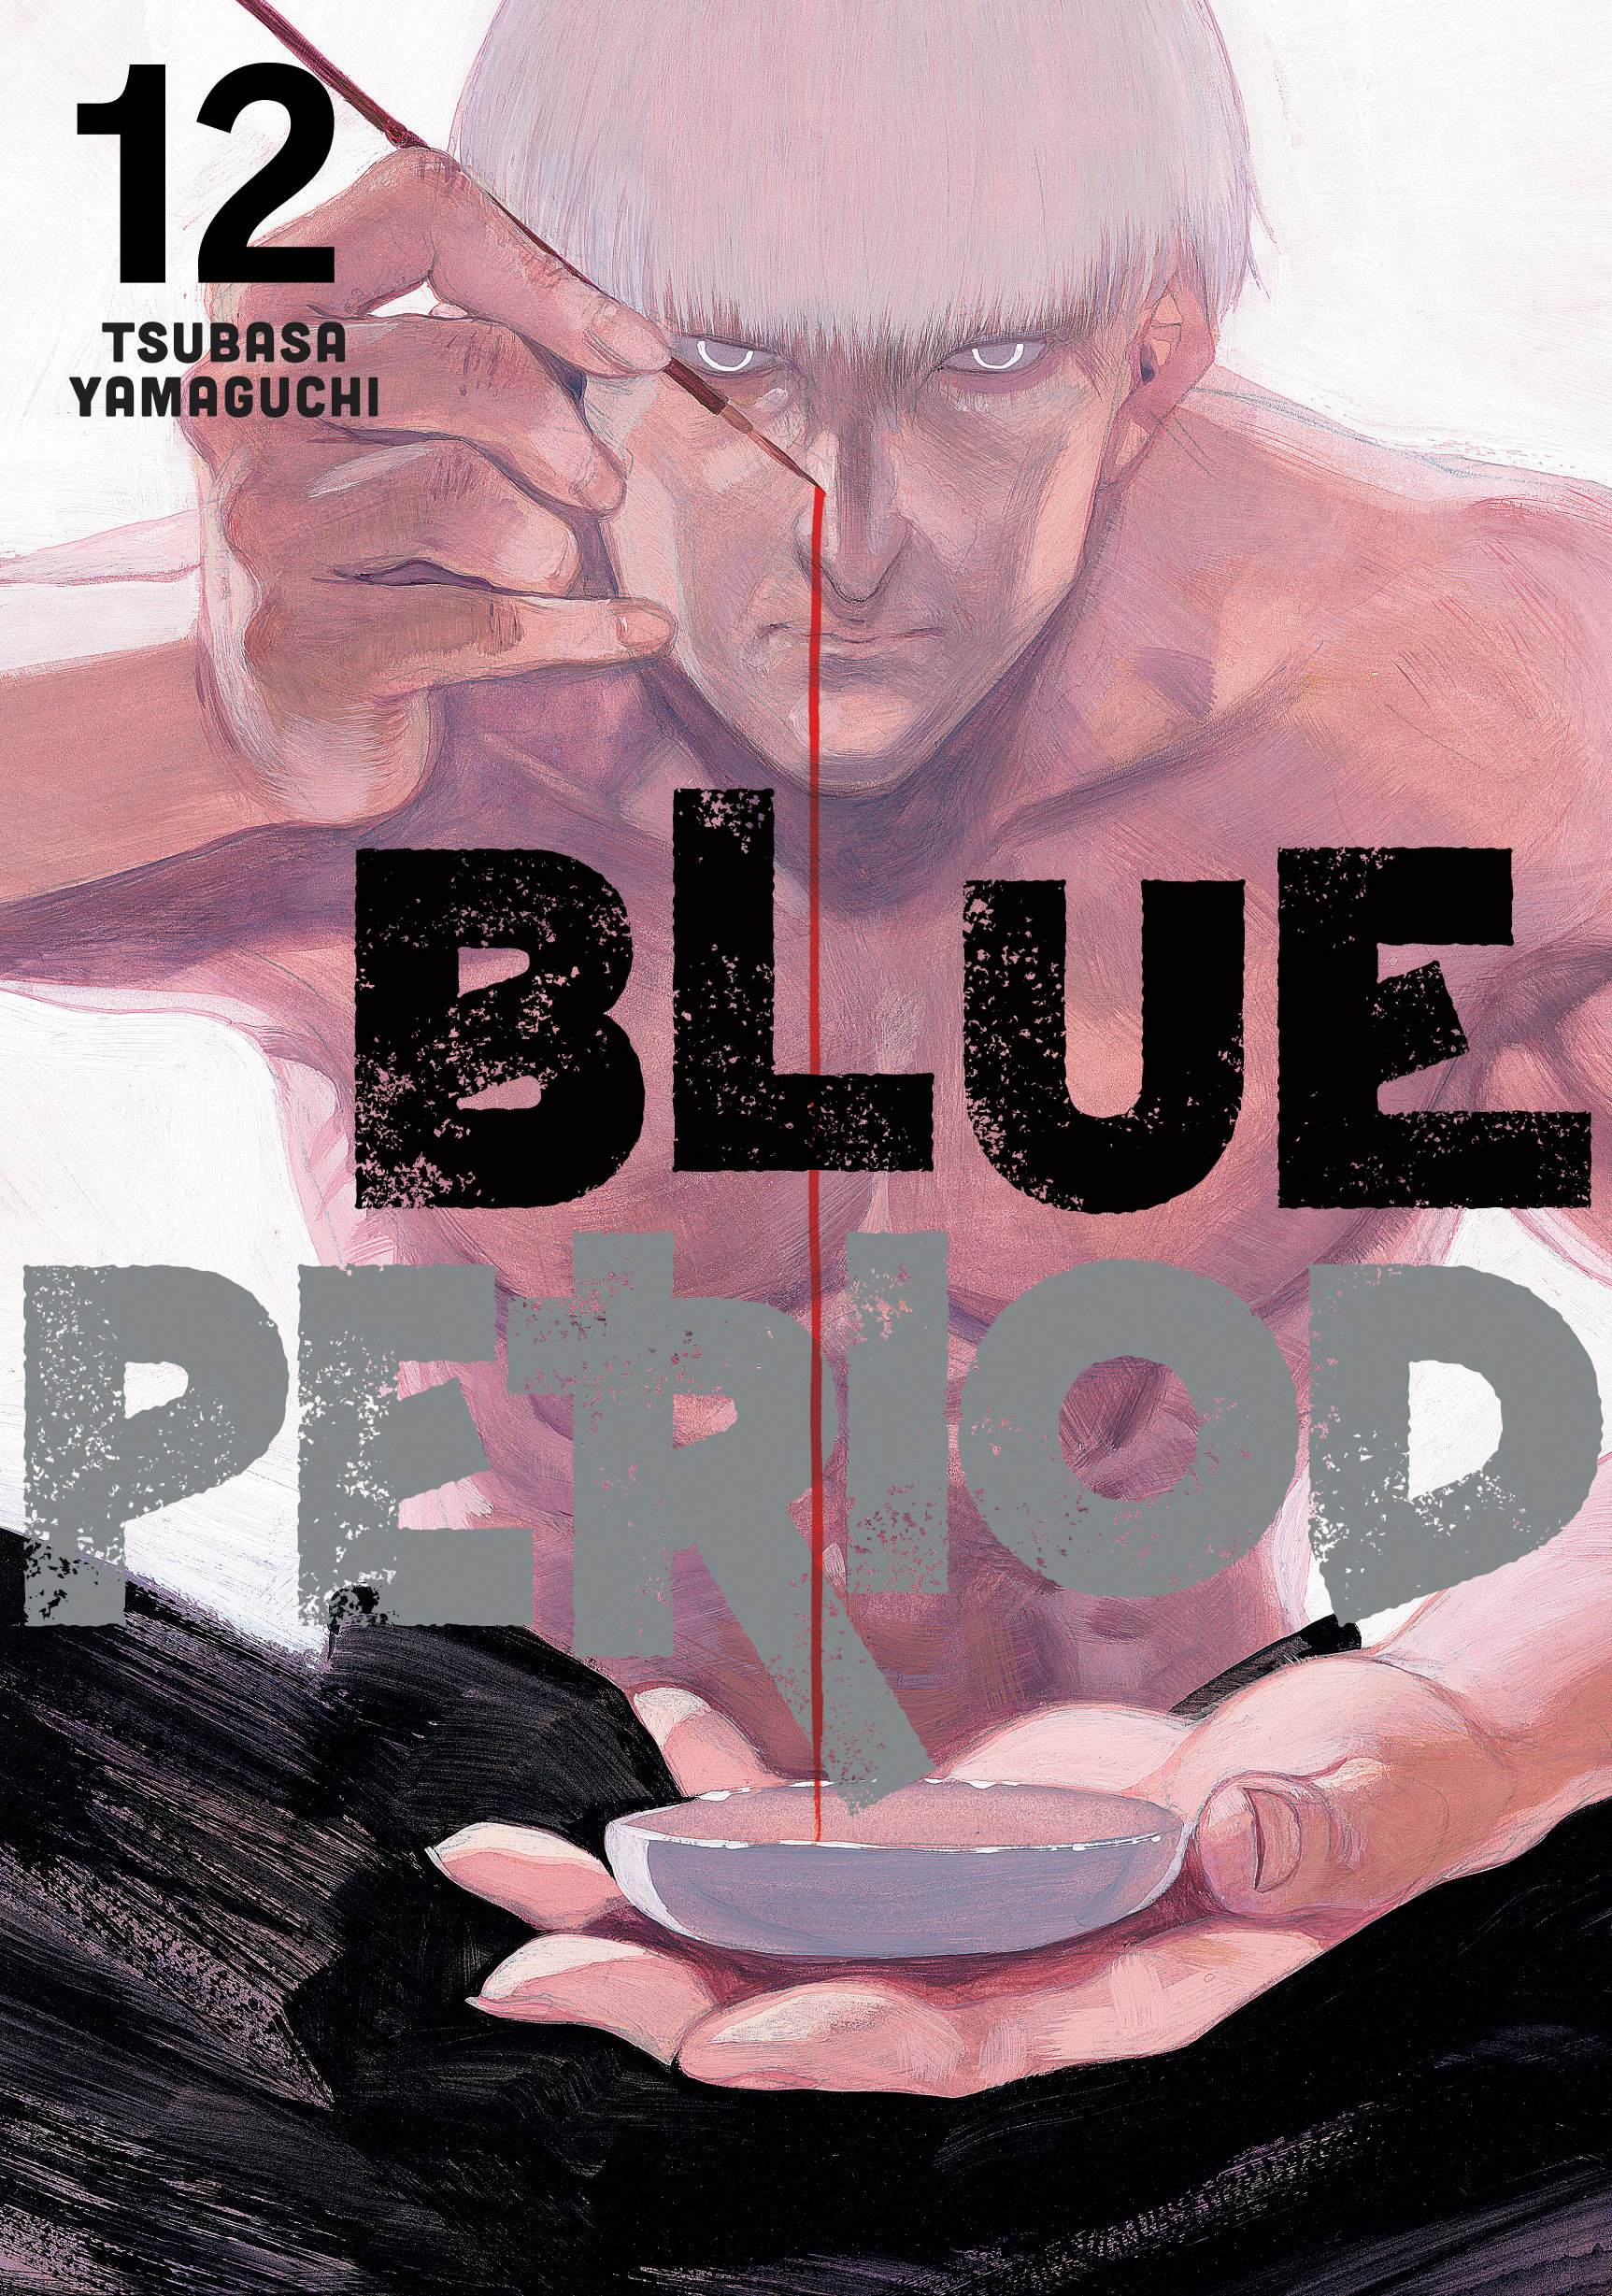 Blue Period Manga Volume 12